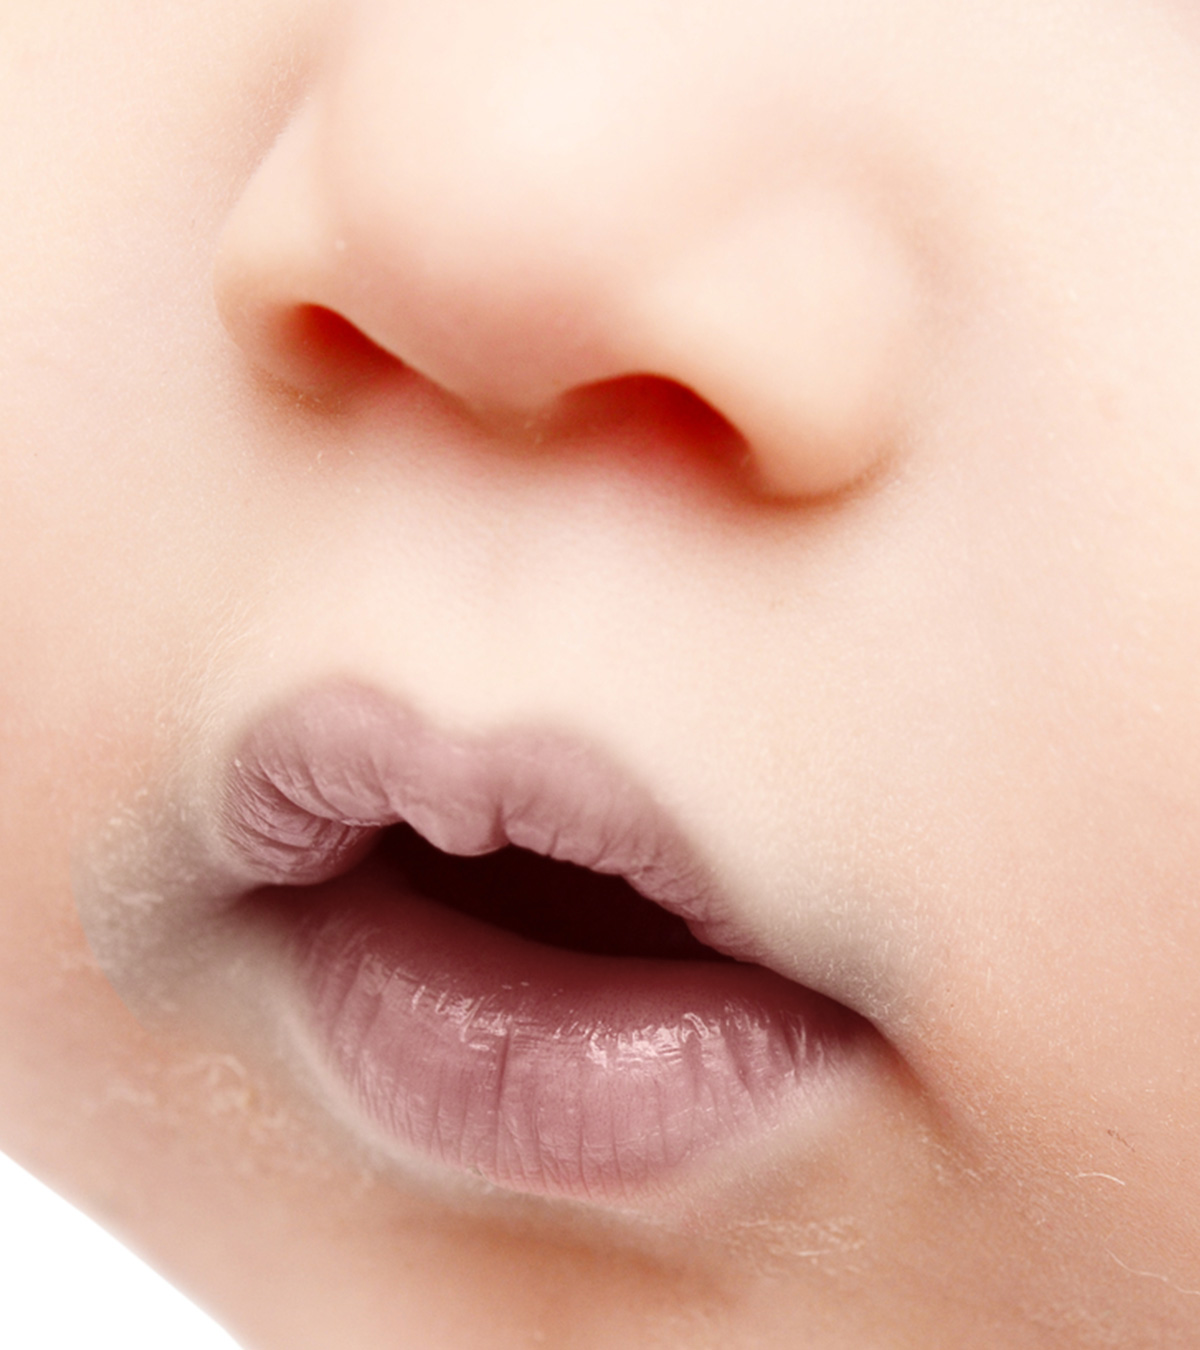 Circumoral Cyanosis In Newborns: Symptoms, Causes And Treatment